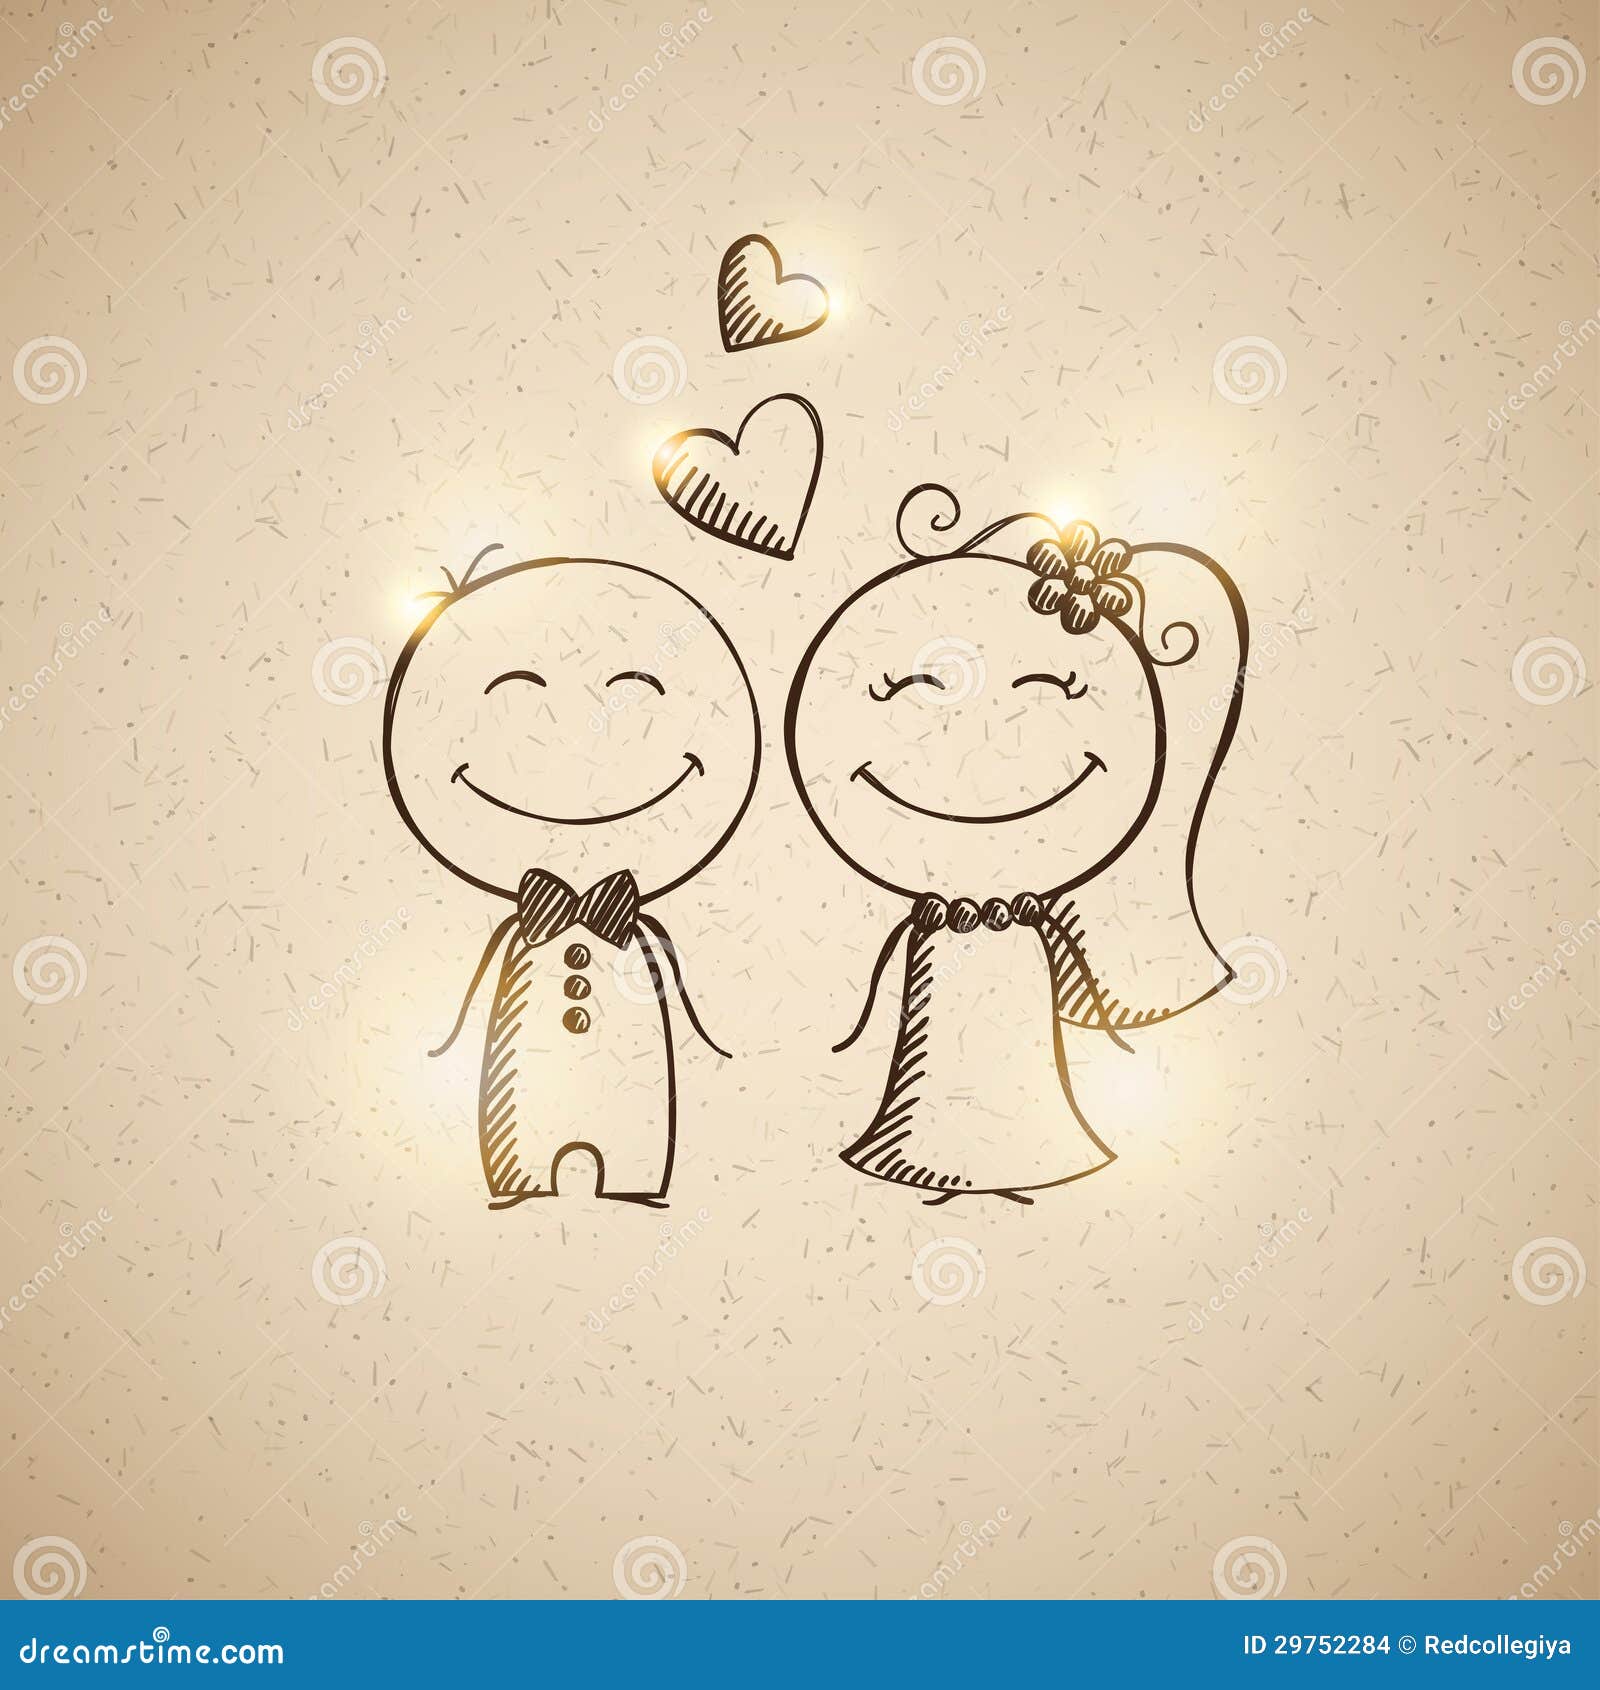 620 Sketches Of Couples In Love Cartoon Illustrations RoyaltyFree Vector  Graphics  Clip Art  iStock